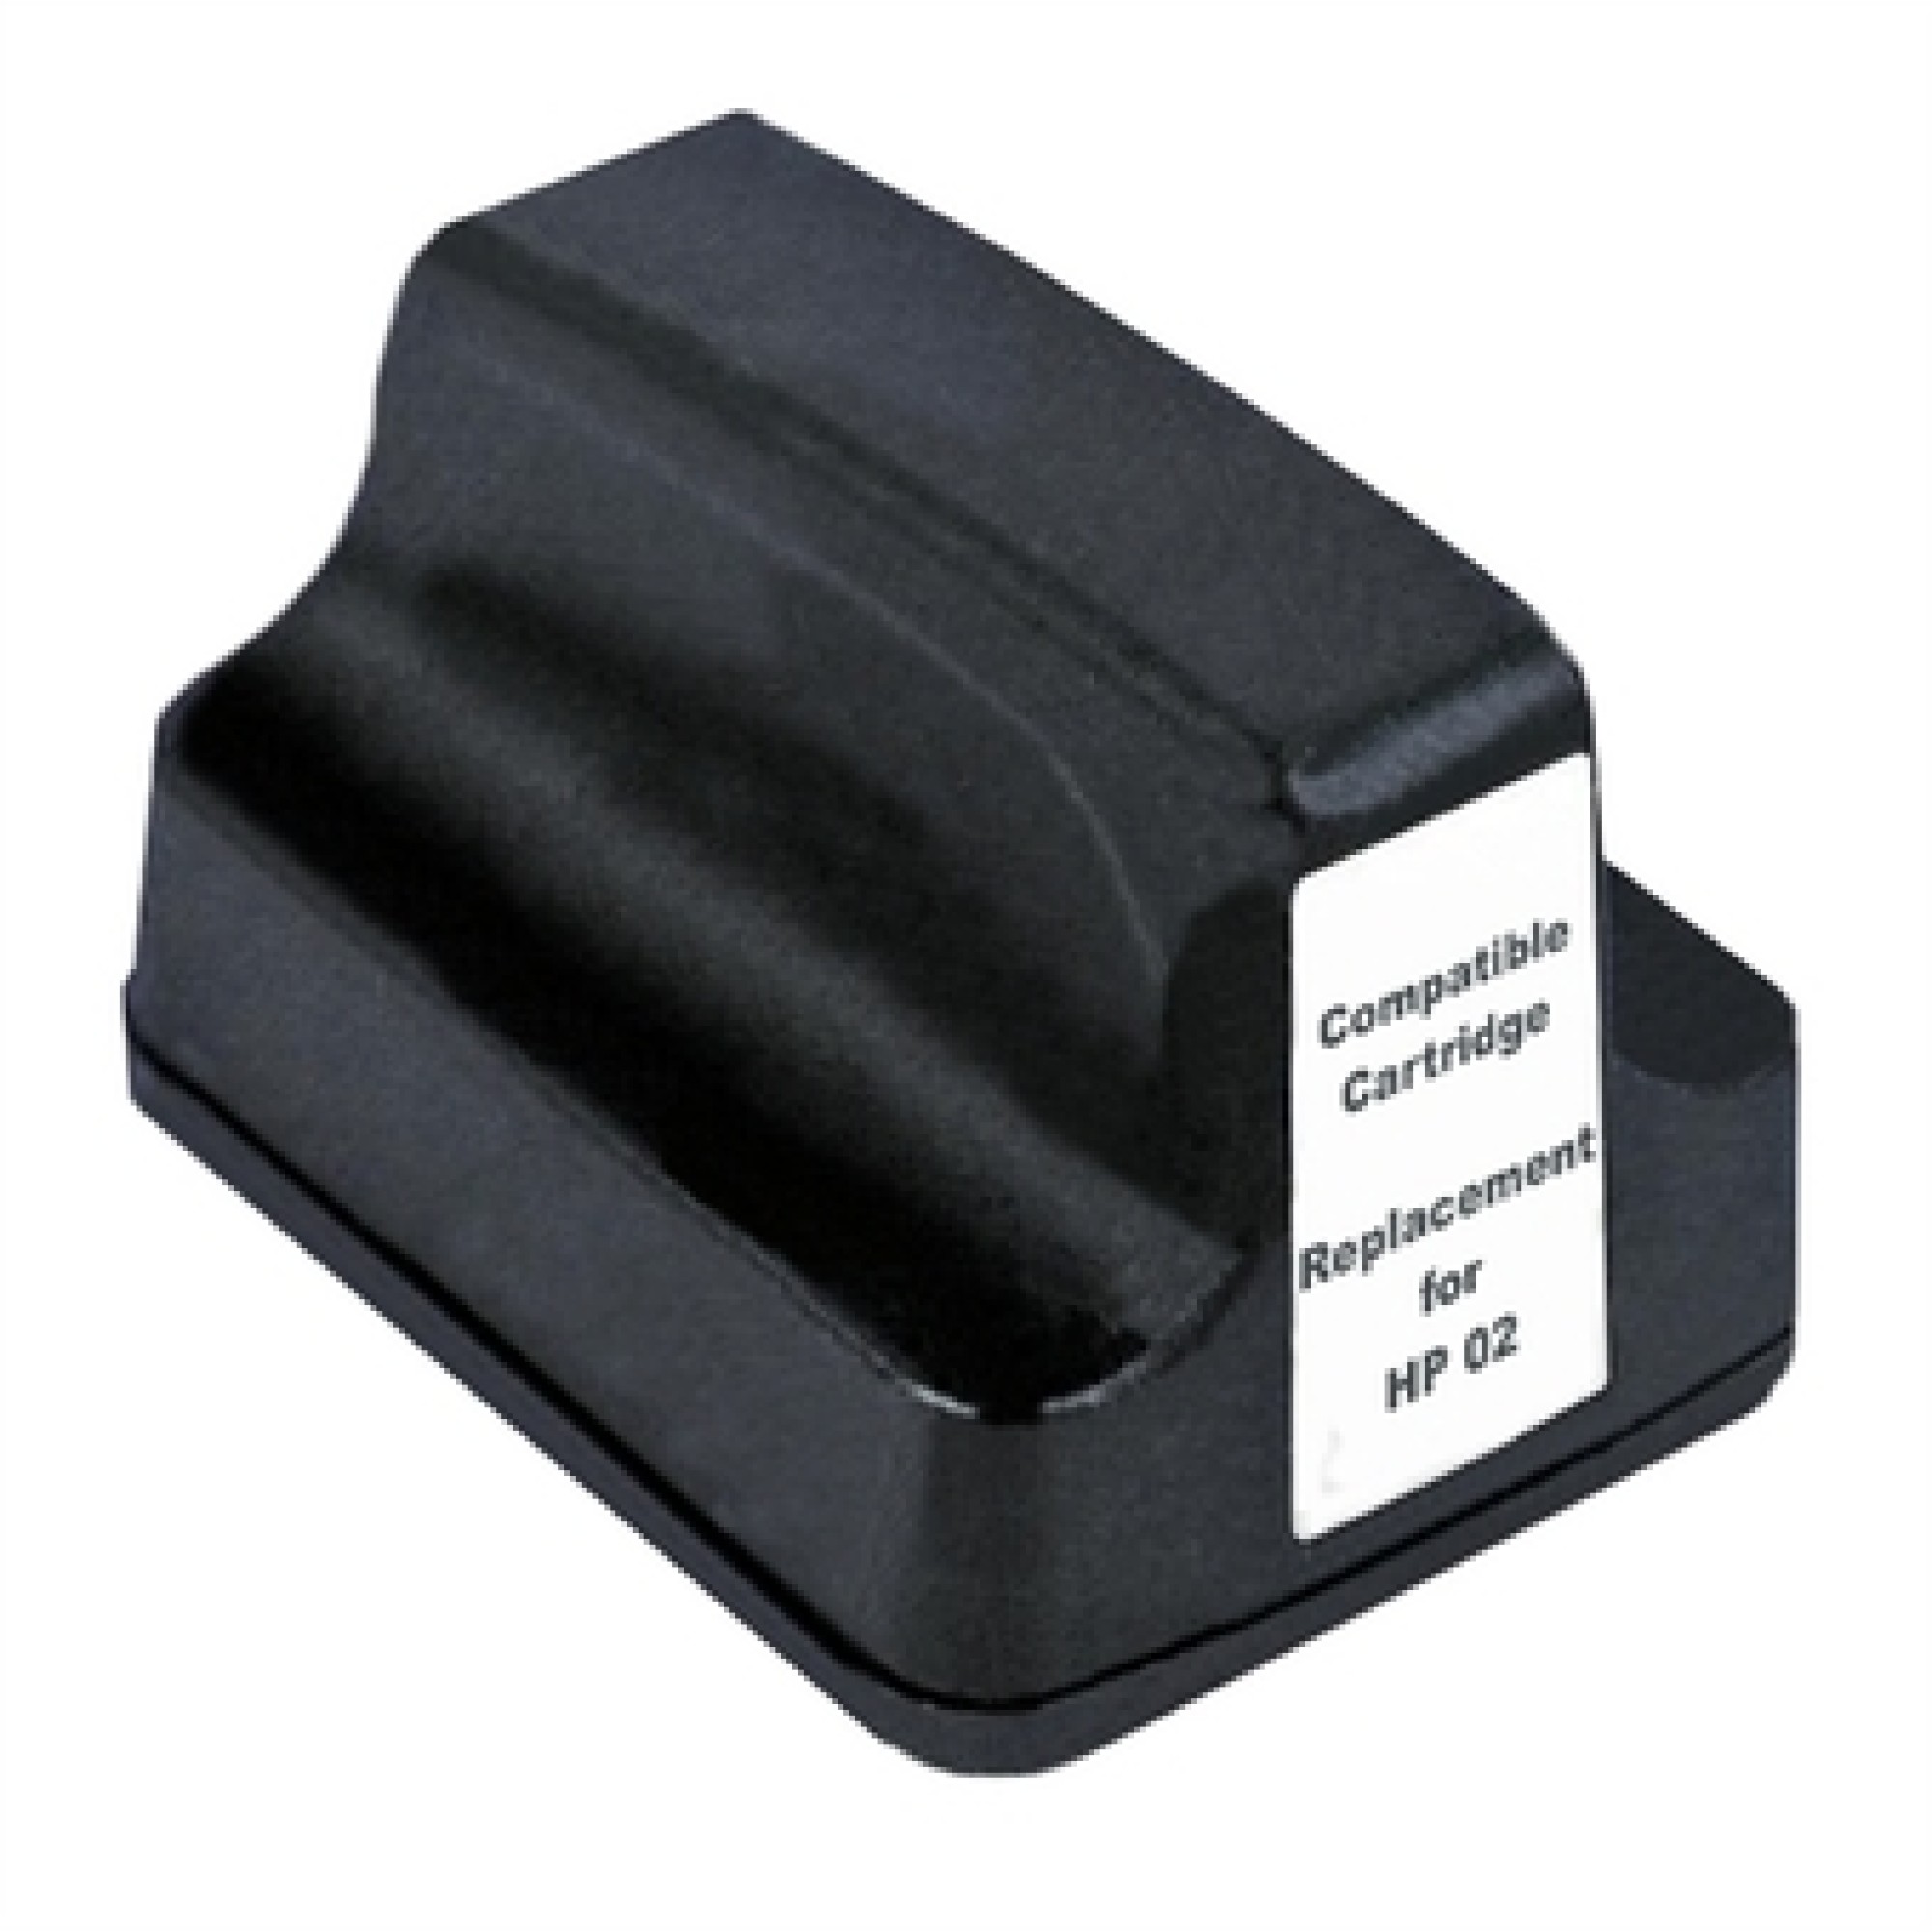 HP 02 / HP02 / HP02xl Compatible Black Ink Cartridge